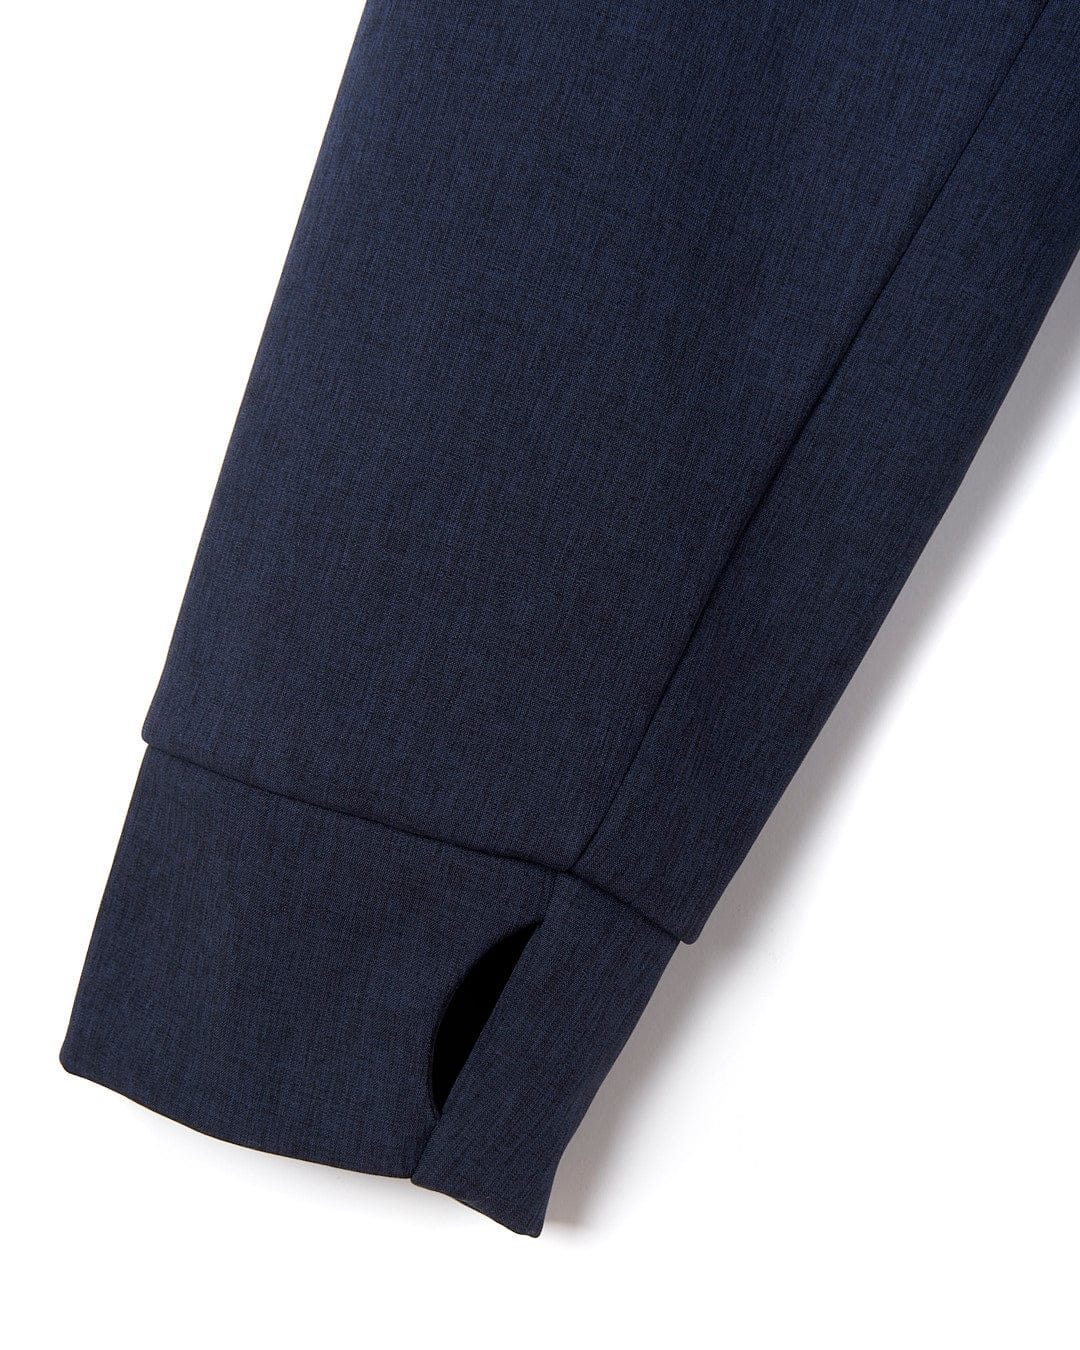 A close up of Saltrock's Purbeck Padded Jacket - Dark Blue slacks.